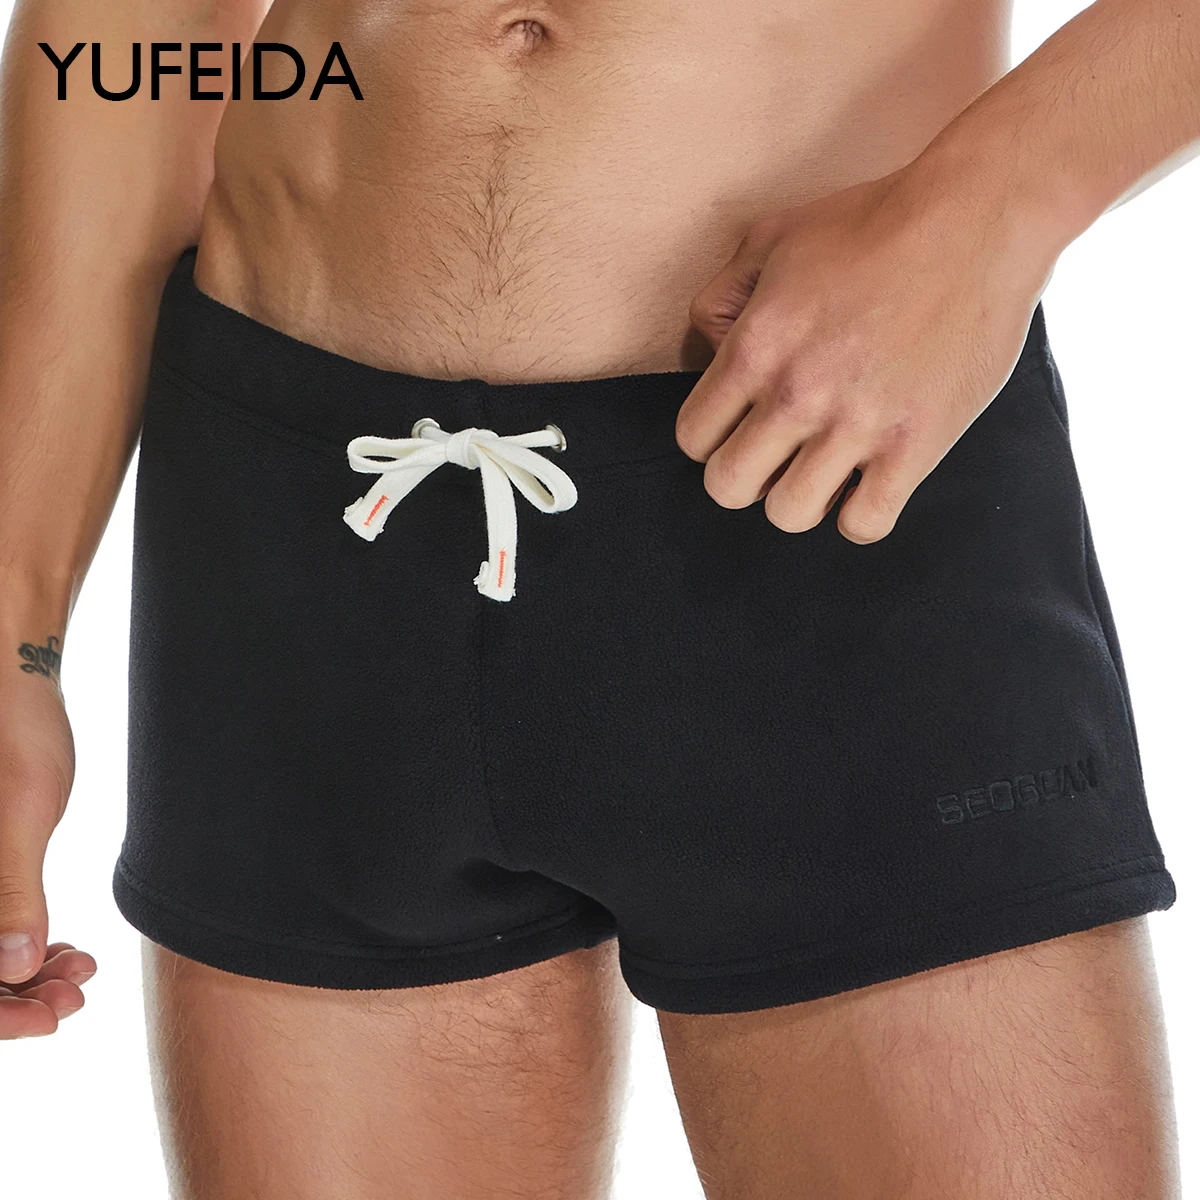 

YUFEIDA Men Gym Training Shorts Workout Sports Fitness Short Pants Men's Casual Running Male Short Pants Swim Trunks Beachwear